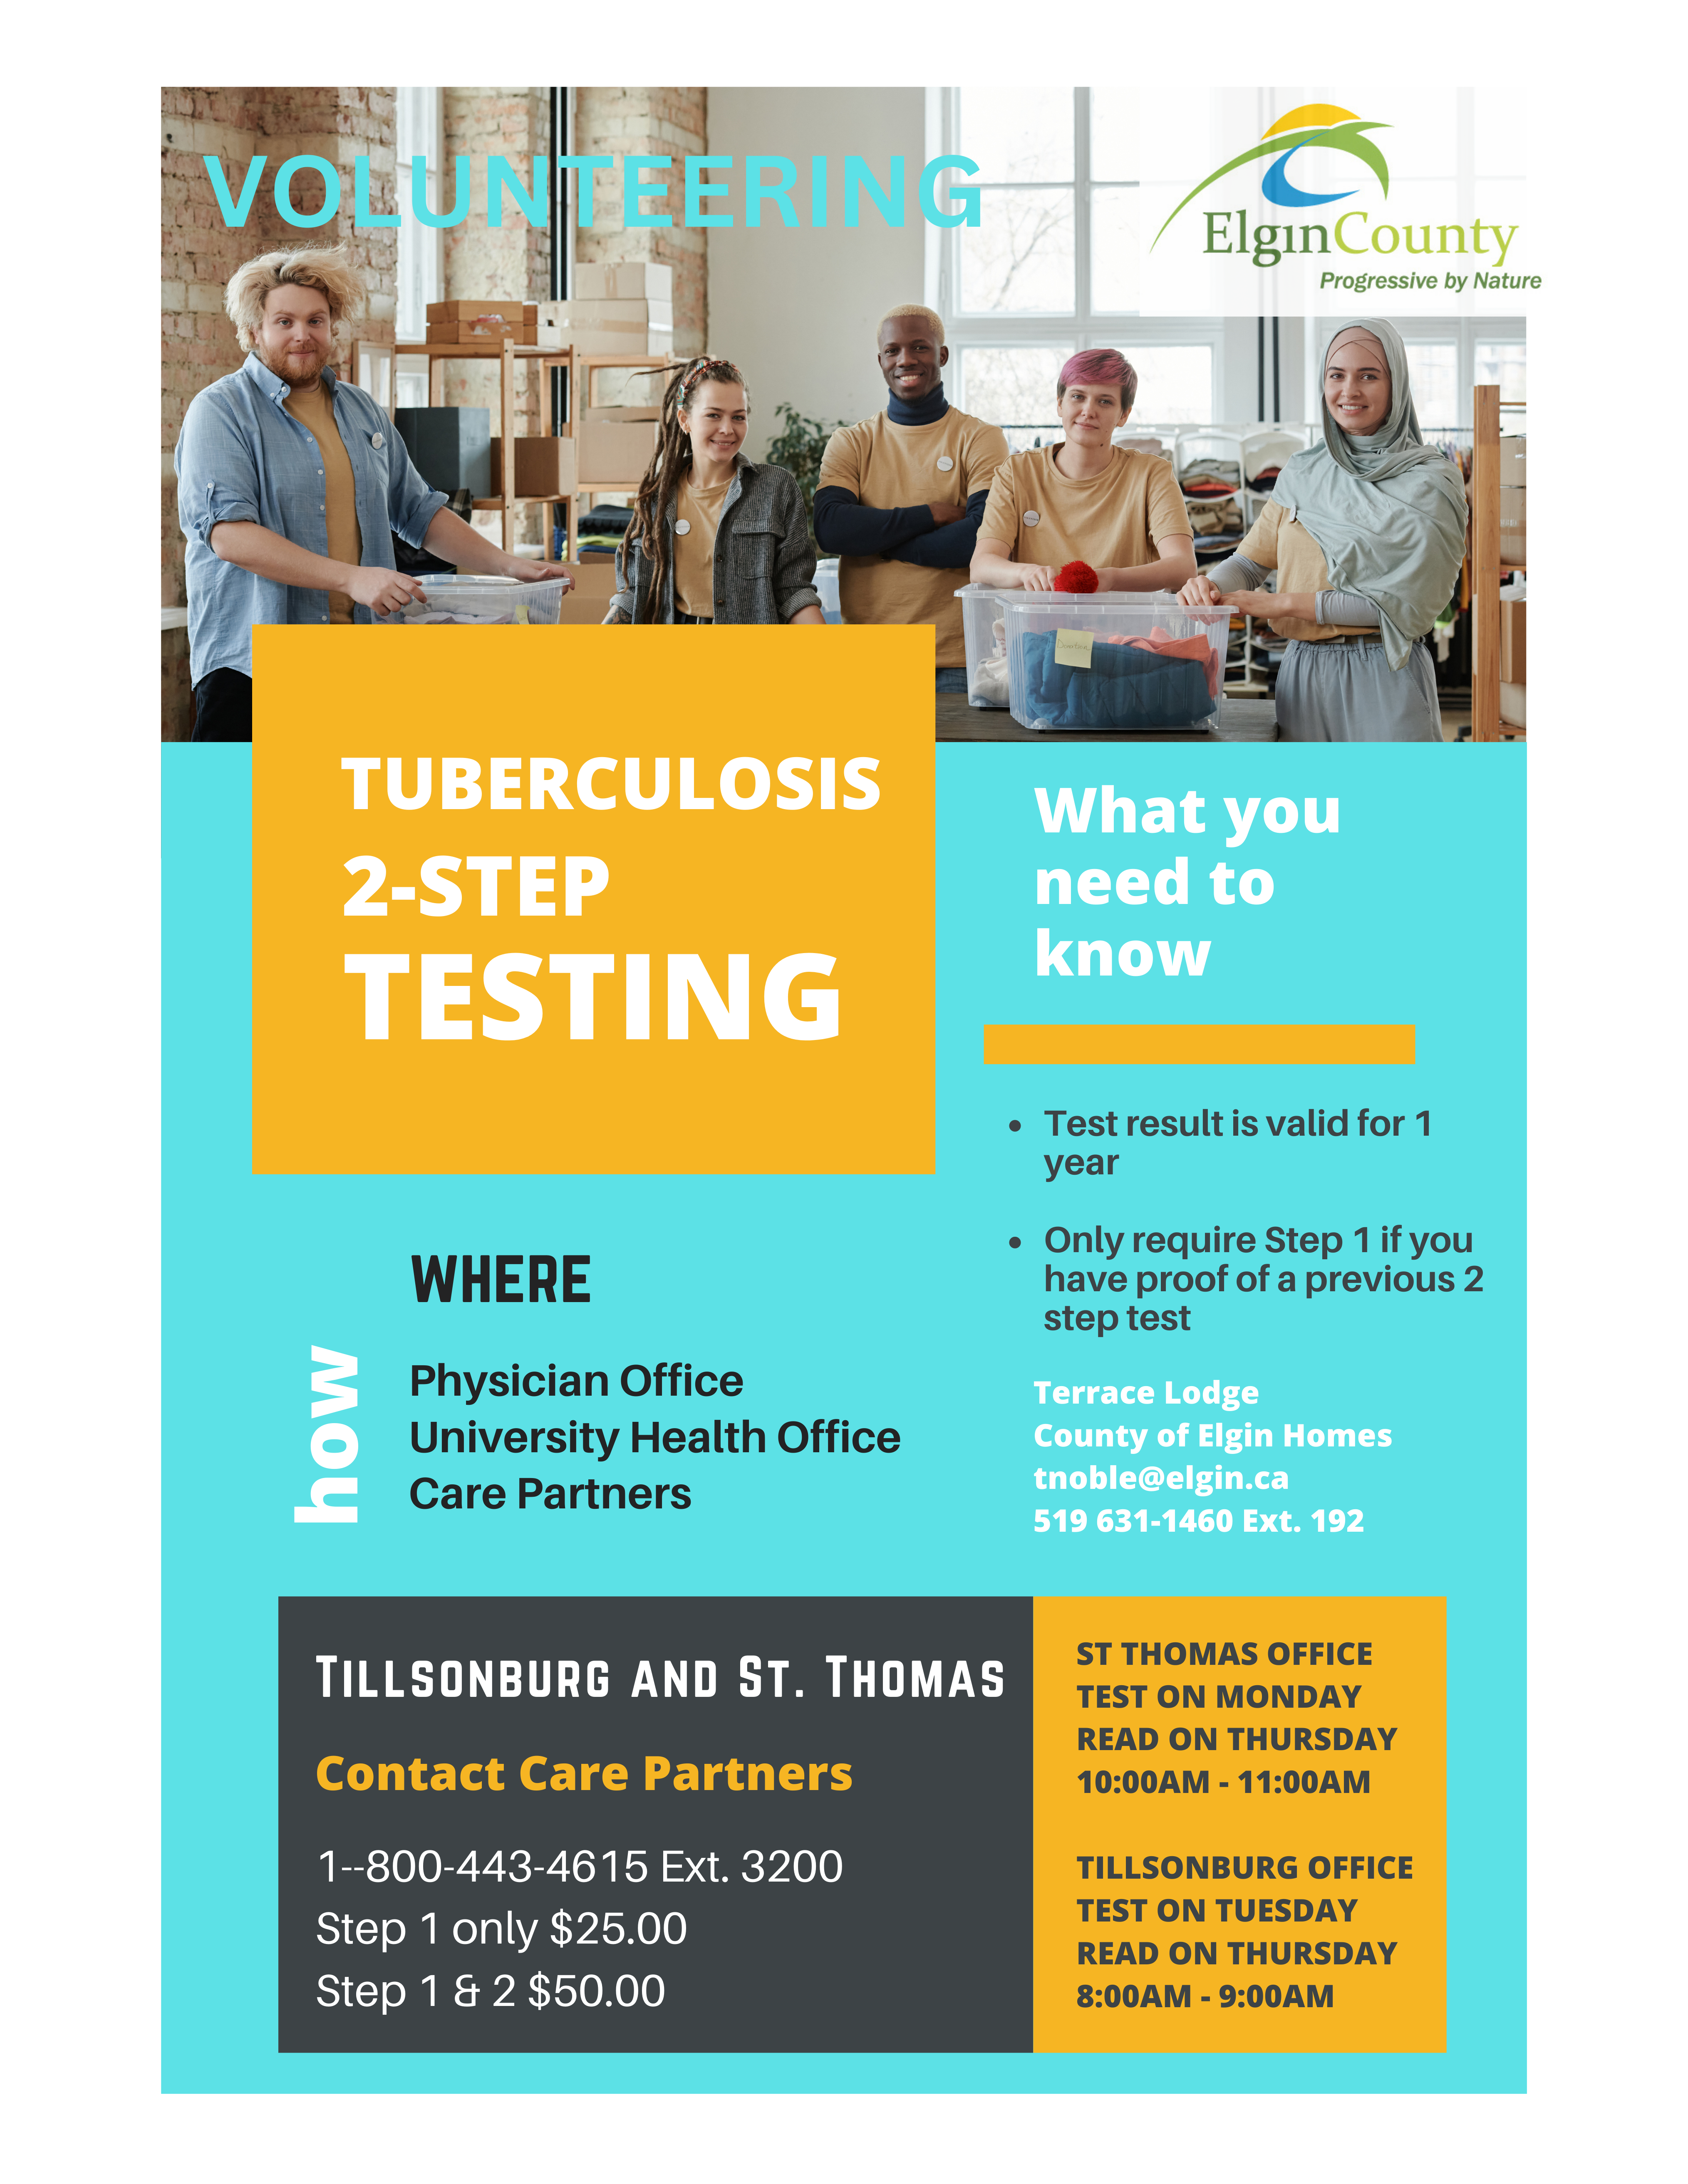 Tuberculosis Test screening information